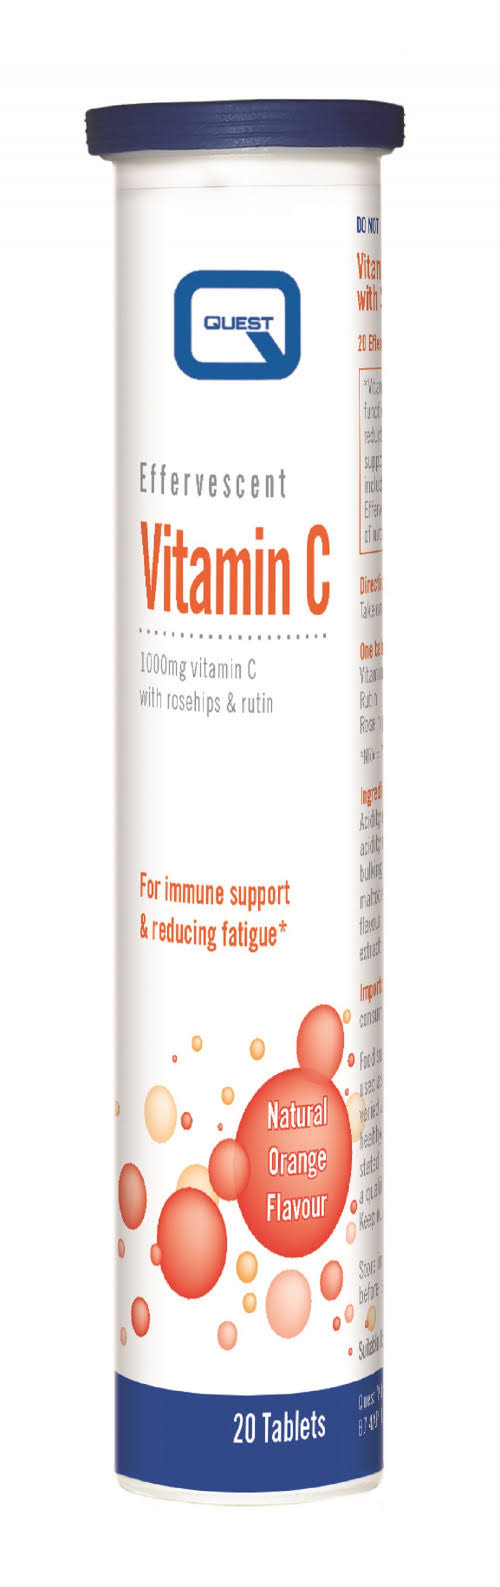 Quest Effervescent Vitamin C - 1000mg, 20 Tablets